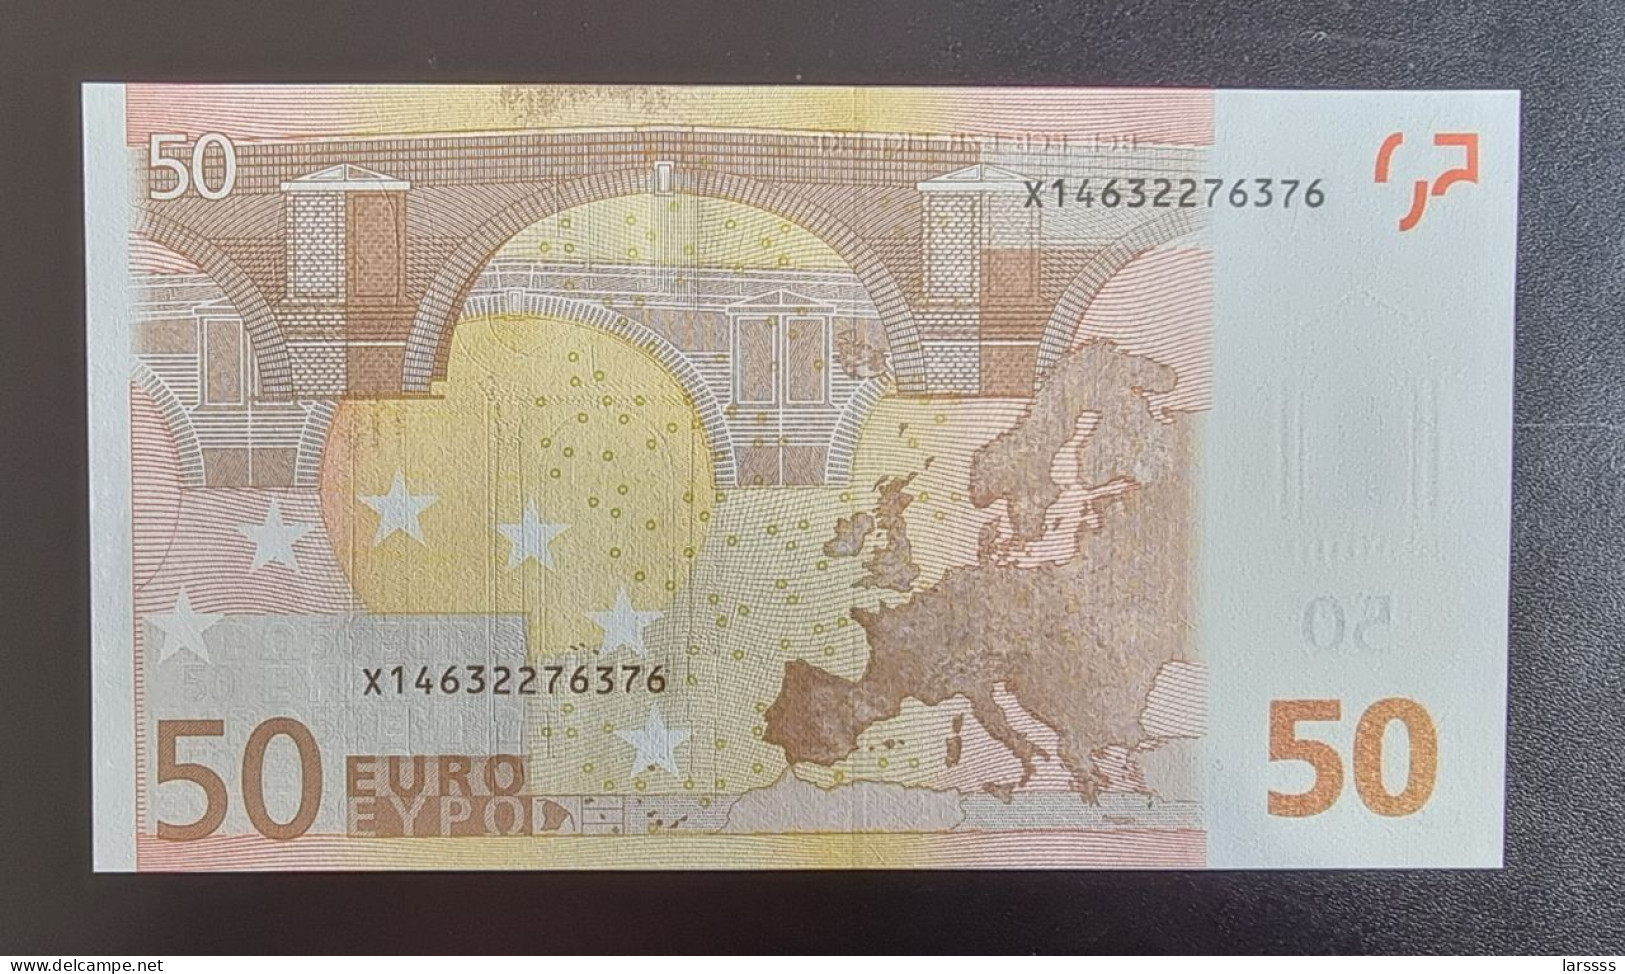 1 X 50€ Euro Duisenberg P005E1 X14632276376 - UNC - 50 Euro